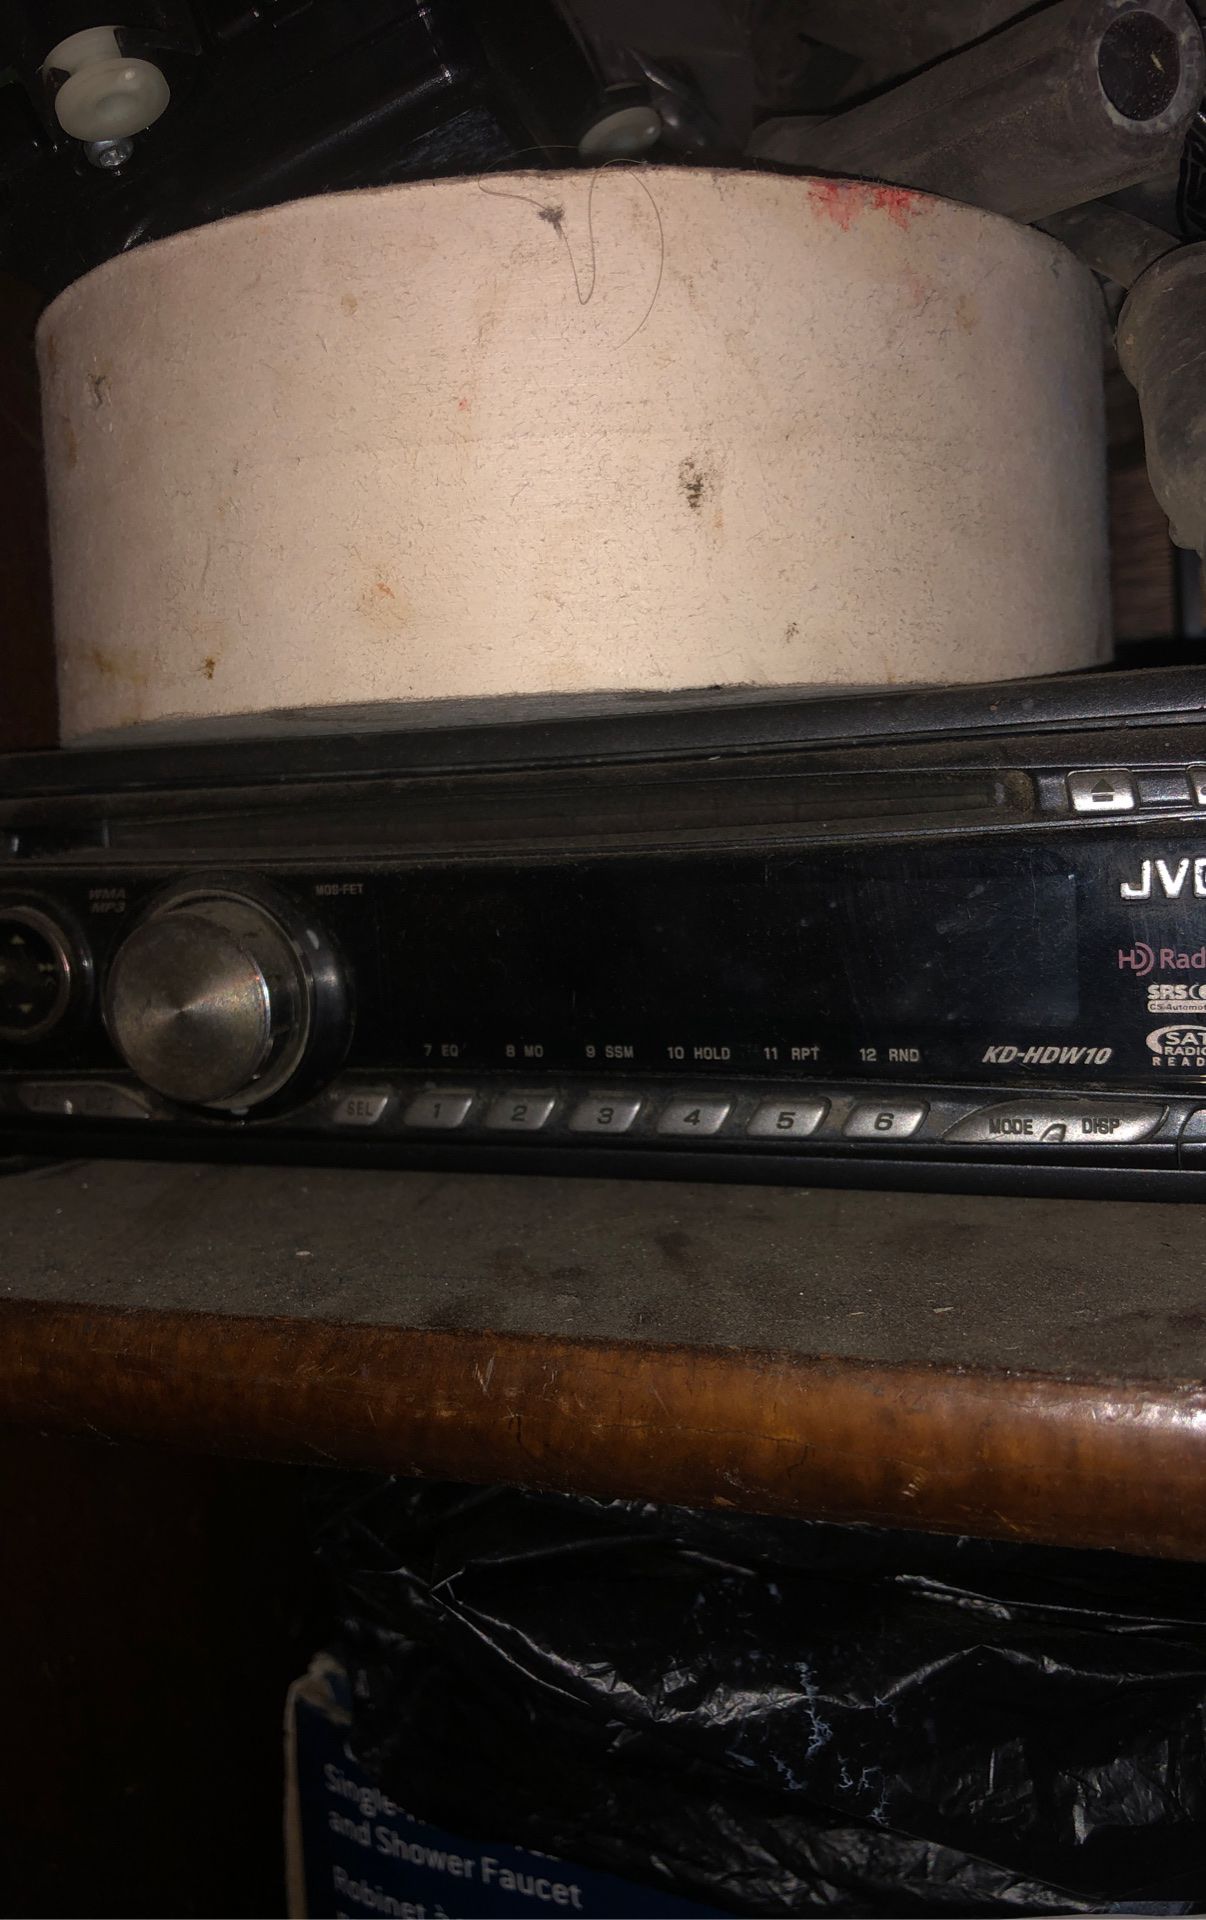 JVC radio no aux or Bluetooth